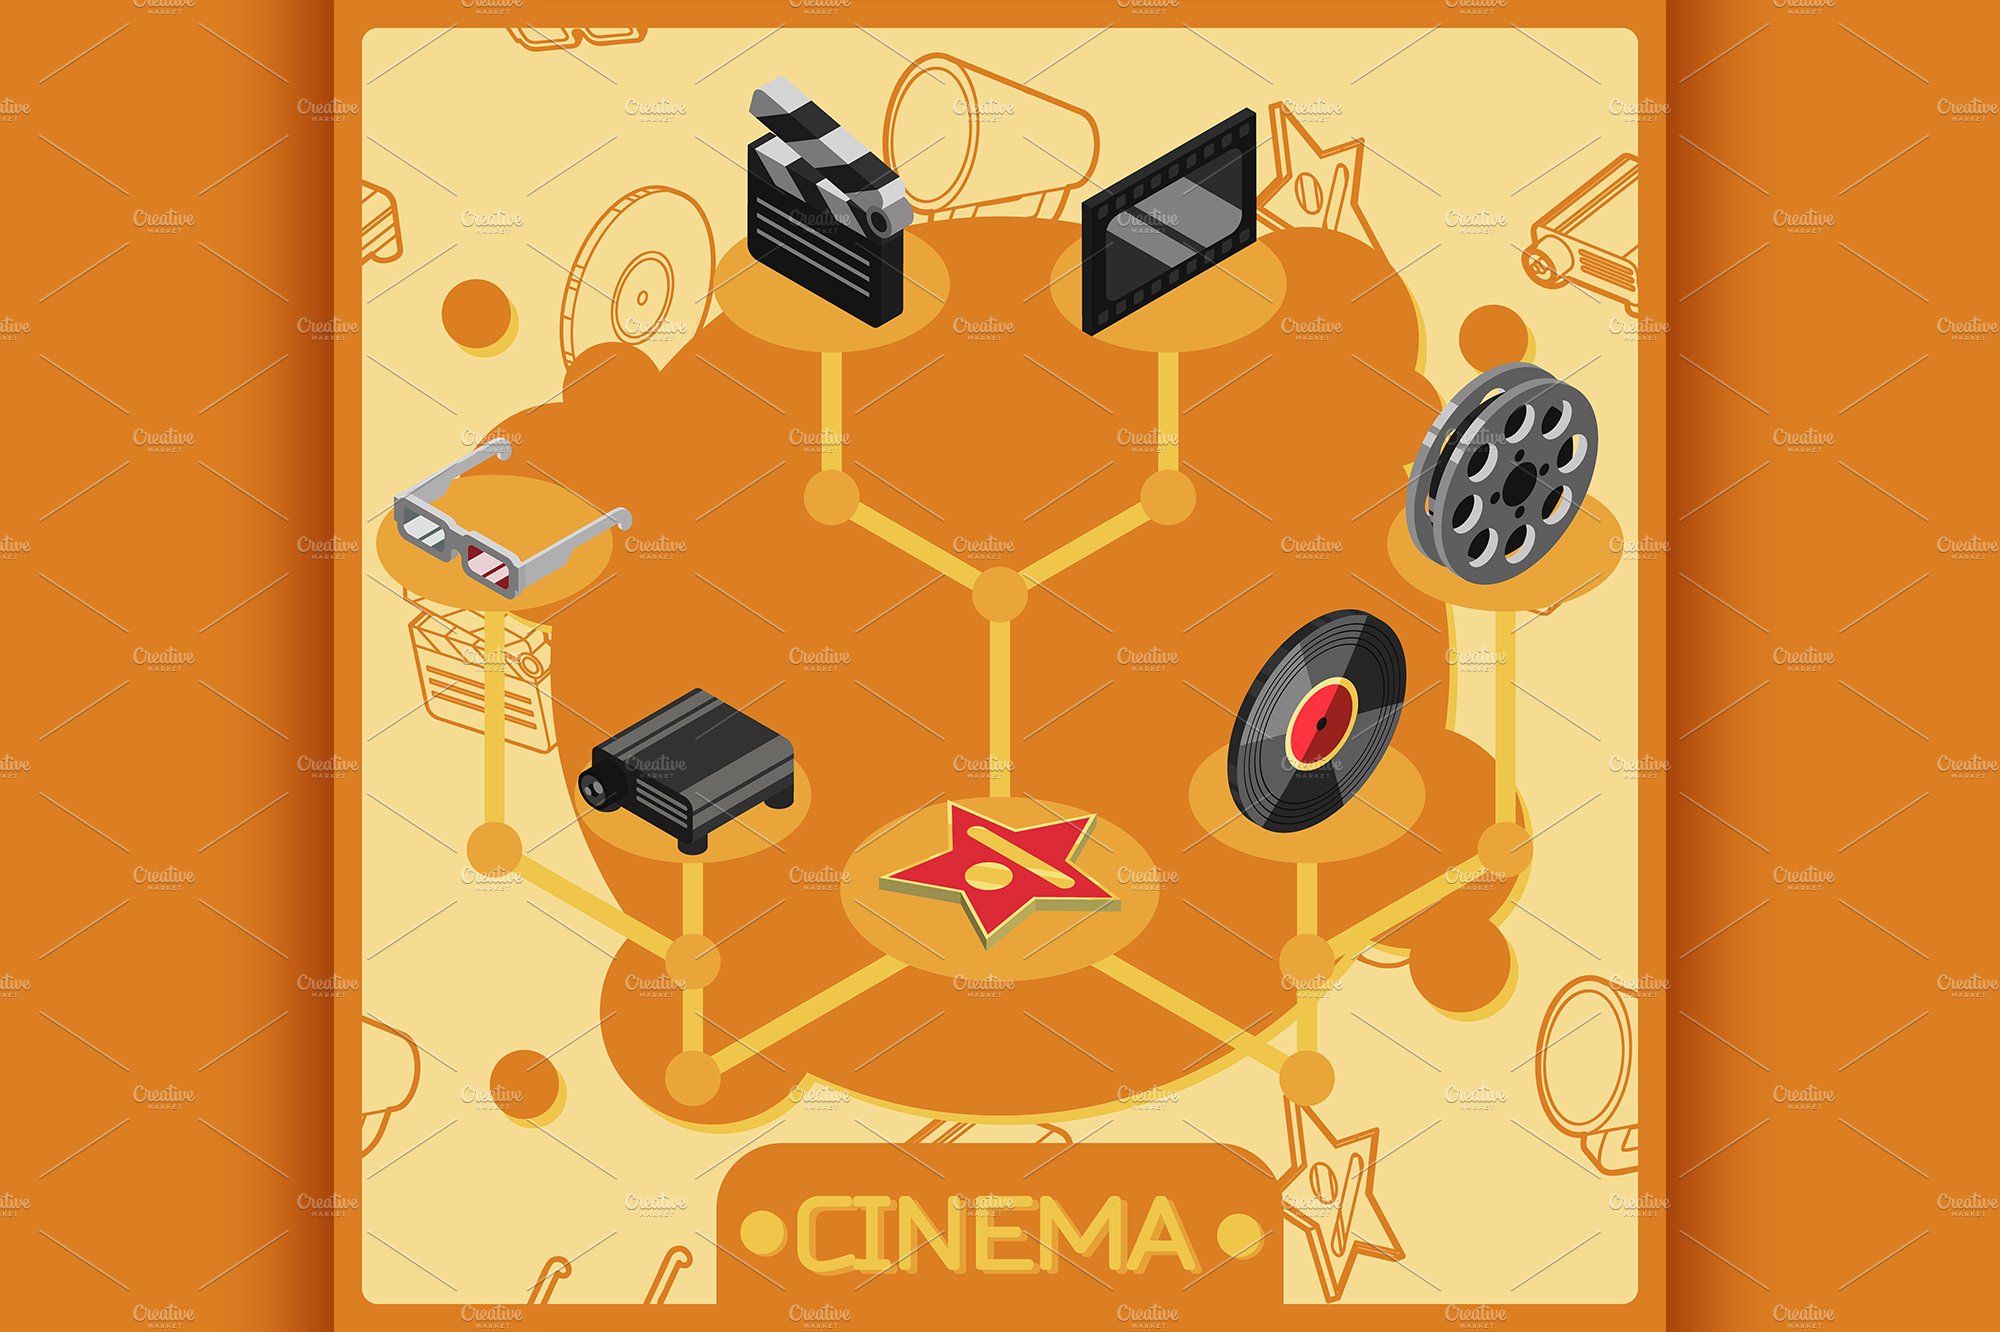 Cinema isometric concept icons cover image.